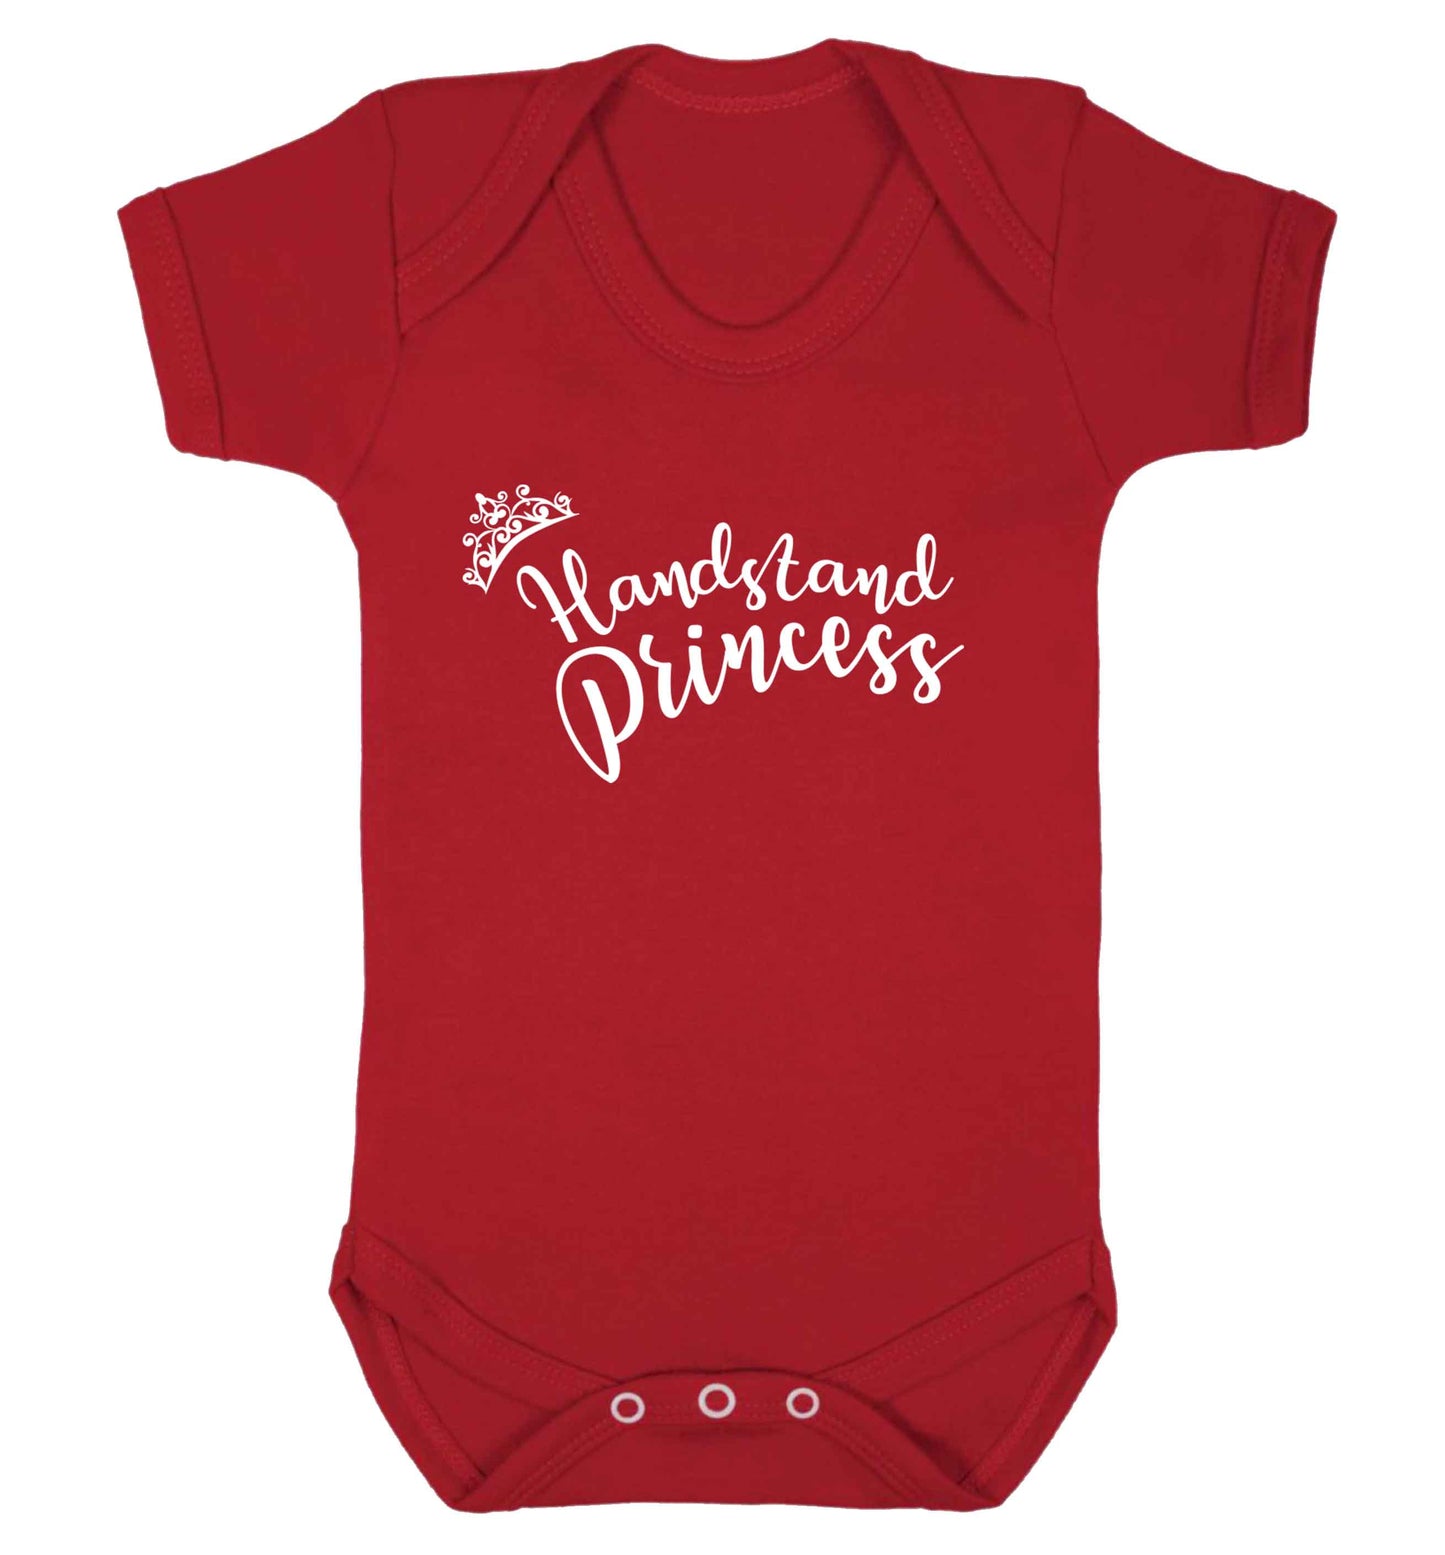 Handstand princess Baby Vest red 18-24 months